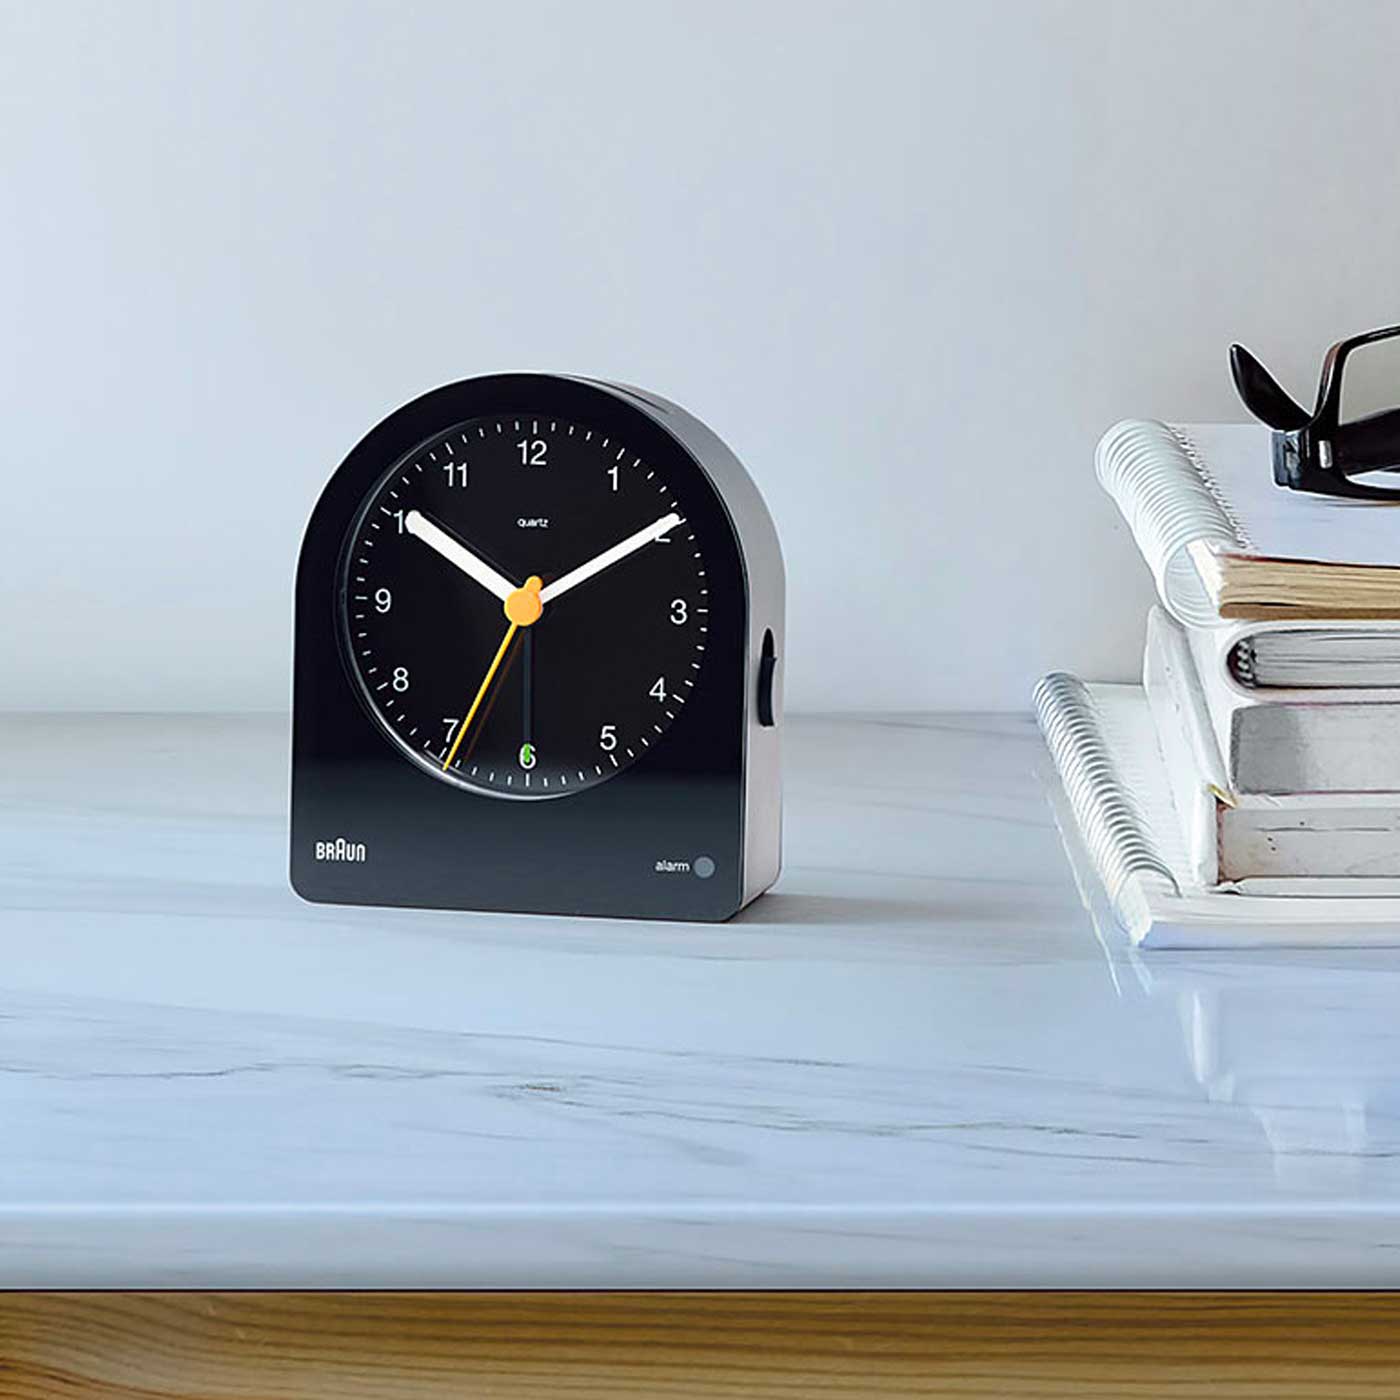 BC22 Braun Classic Analogue Alarm Clock - White – Braun Clocks - US